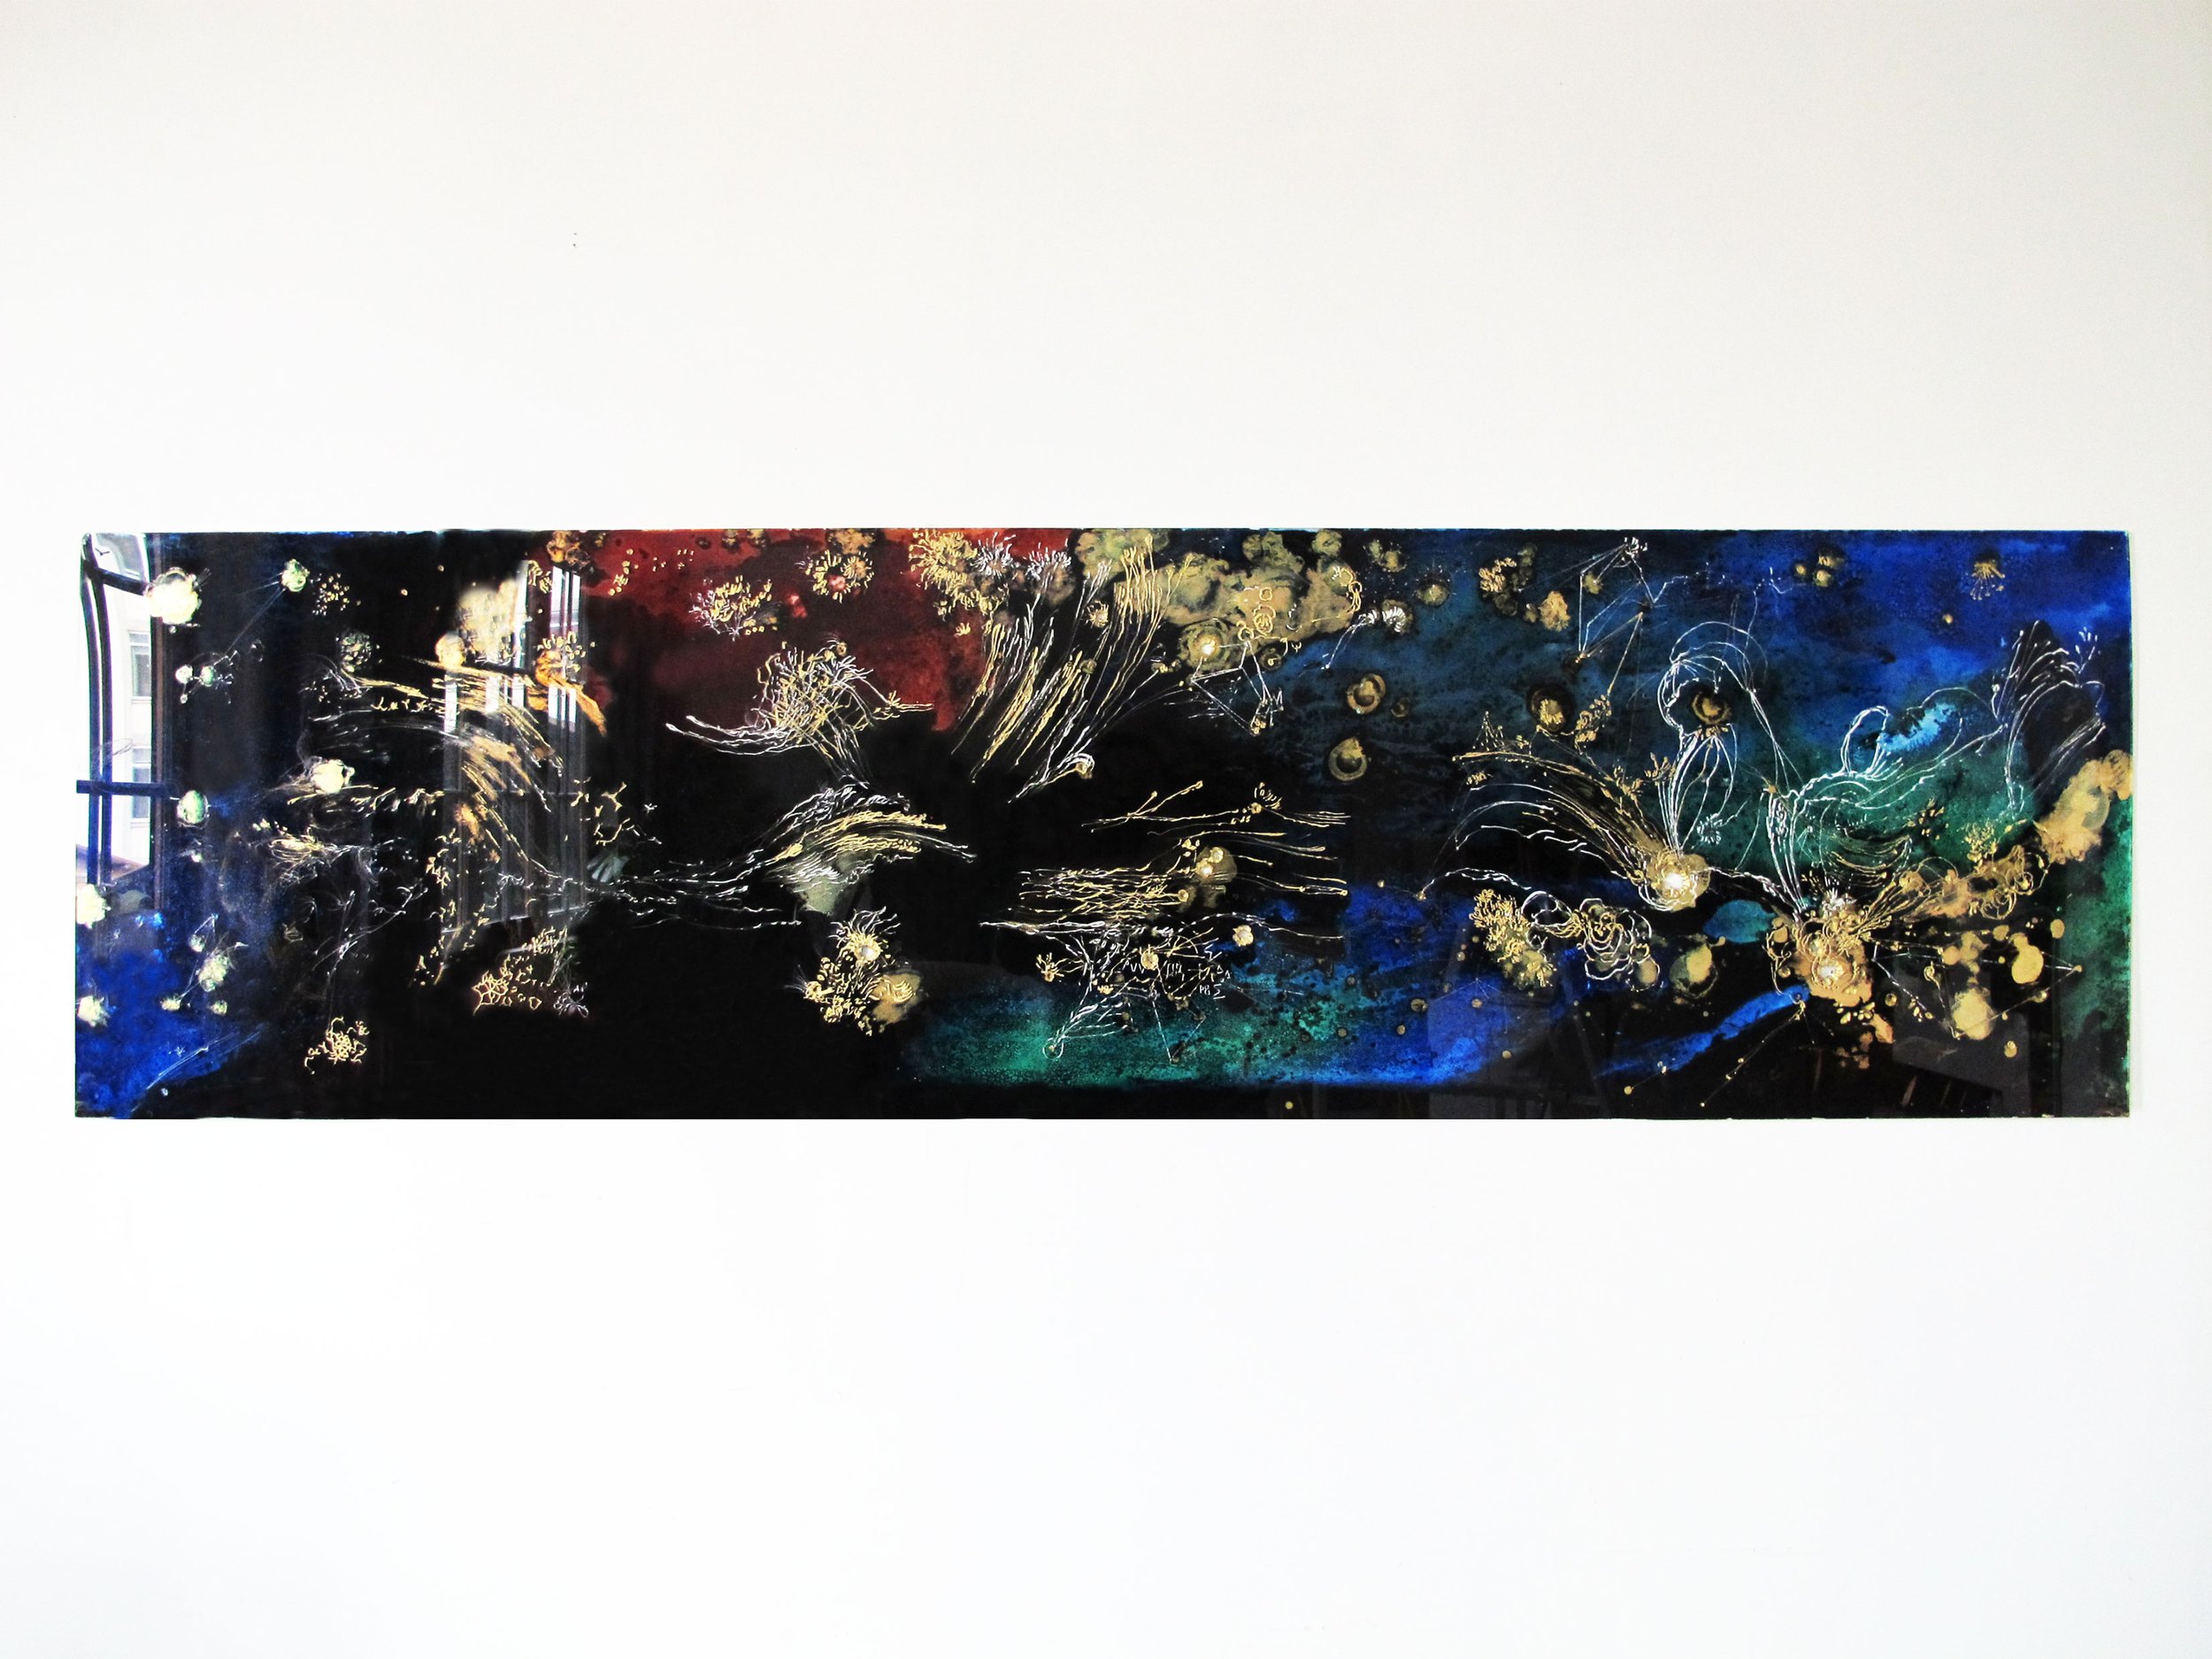  PLASMA SUBATOMIQUE (2022) Peinture et techniques mixtes sur plexiglas  50 x 180 cm 3500 euros 